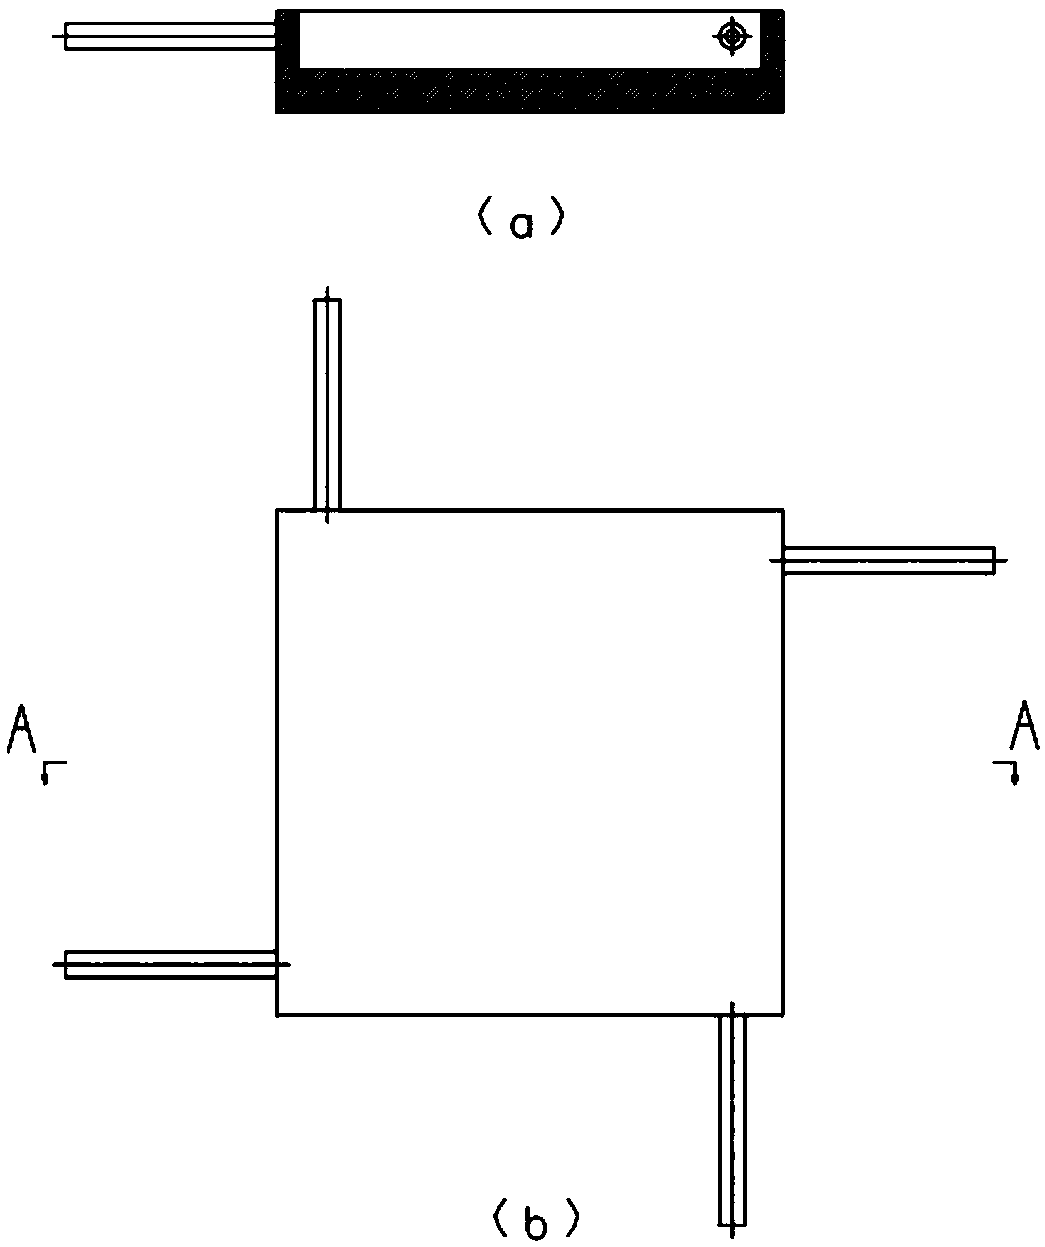 Multi-evaporator loop heat pipe